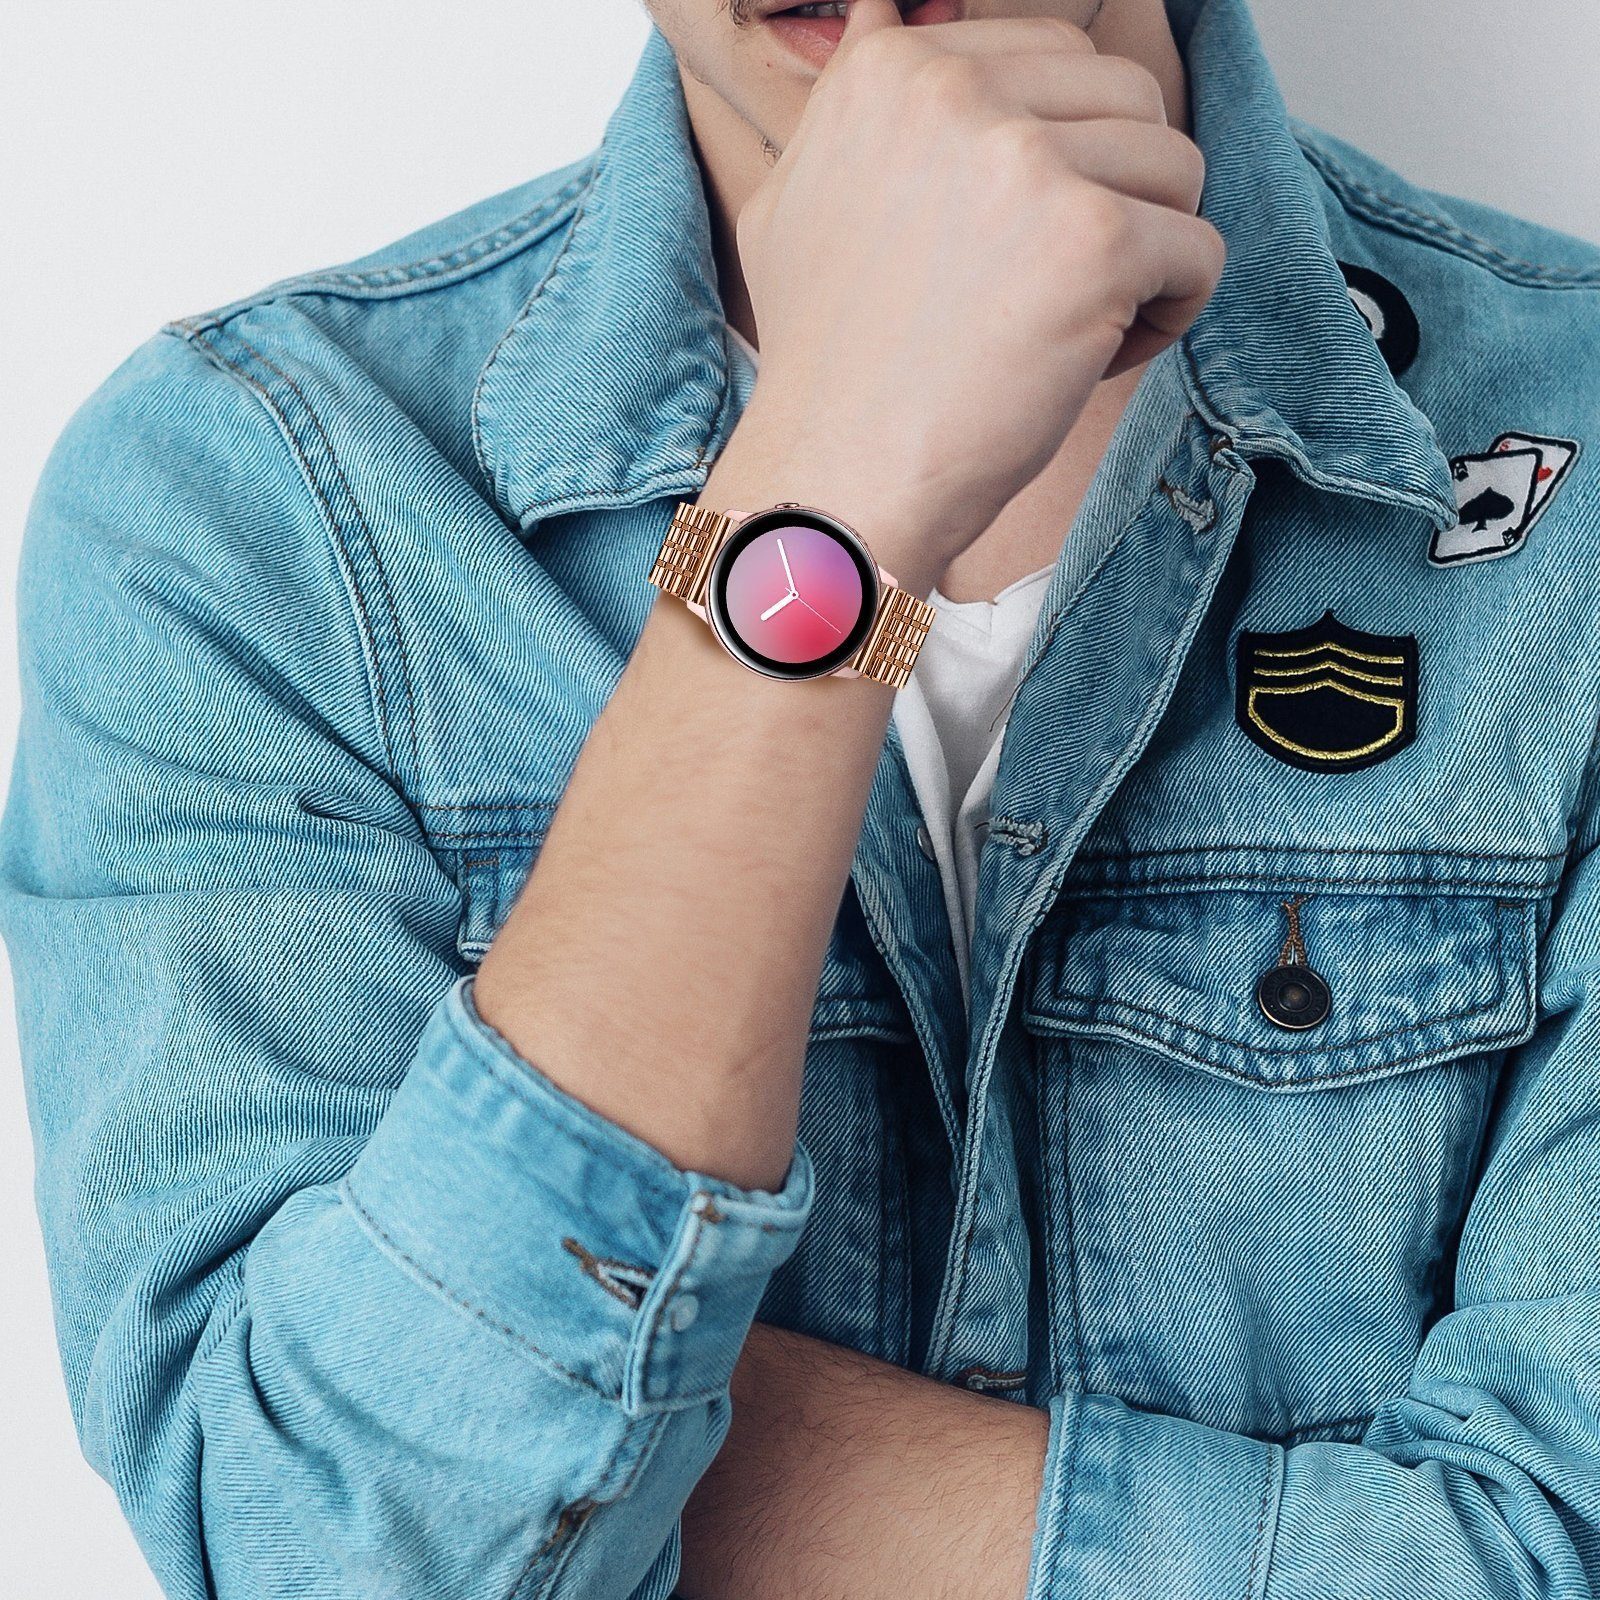 Roségold Smartwatch-Armband 3 Band, Uhrenarmbänder,Geeignet, Galaxy Watch 42mm GT2 Diida Smartwatch-Armband,Watch für Watch 2/watch HUAWEI 41/42MM/active/S2,